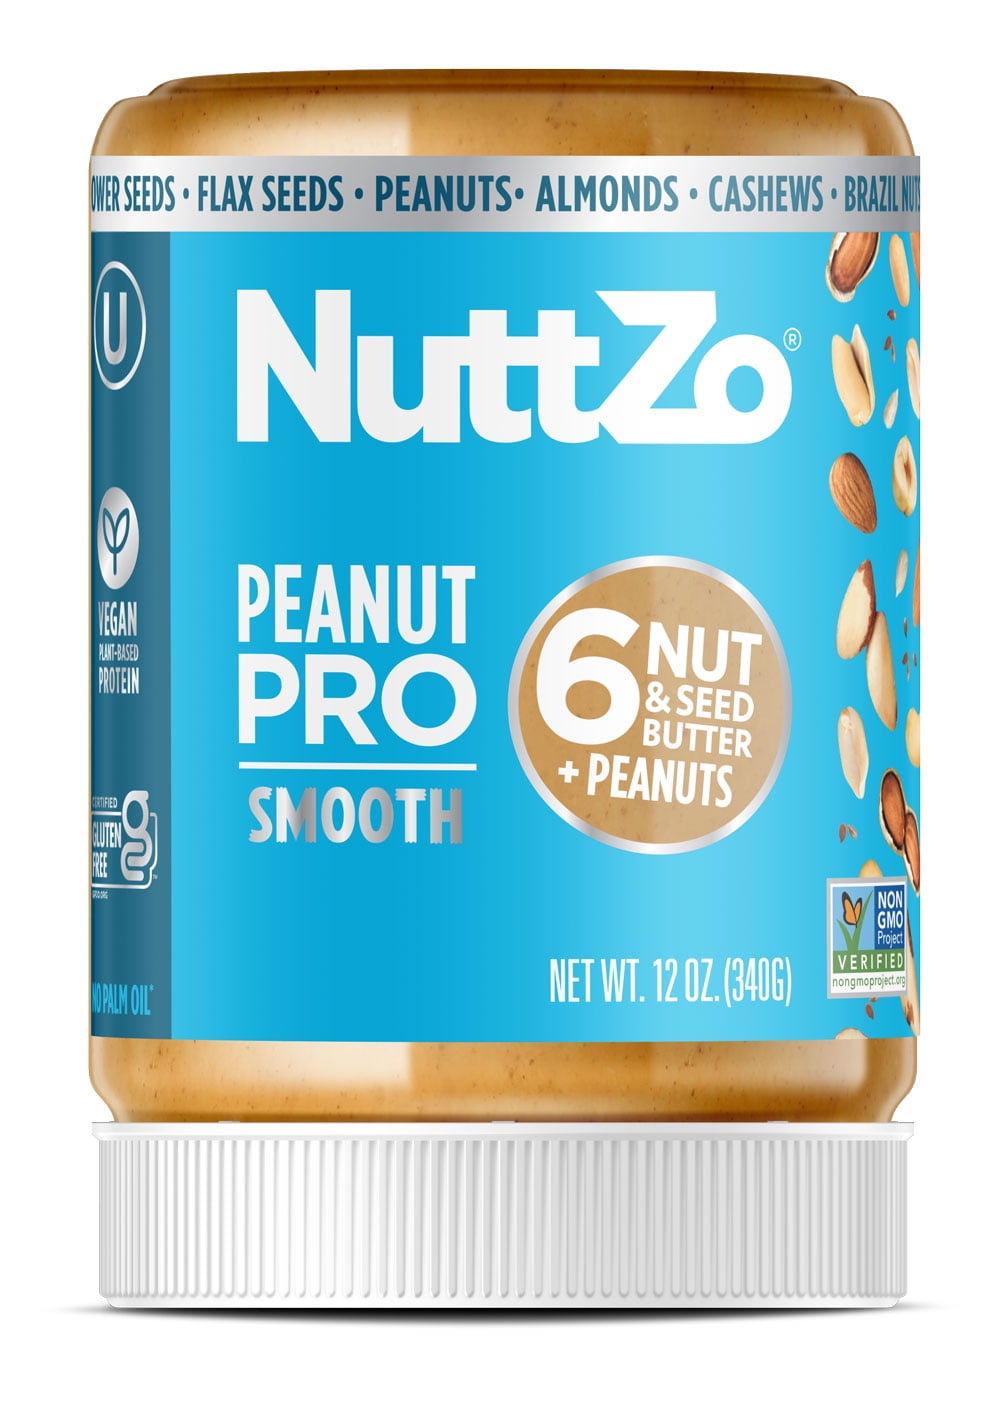 NuttZo Peanut Pro Smooth Peanut Butter Spread, 7 Nuts & Seeds Blend, 12 oz Jar